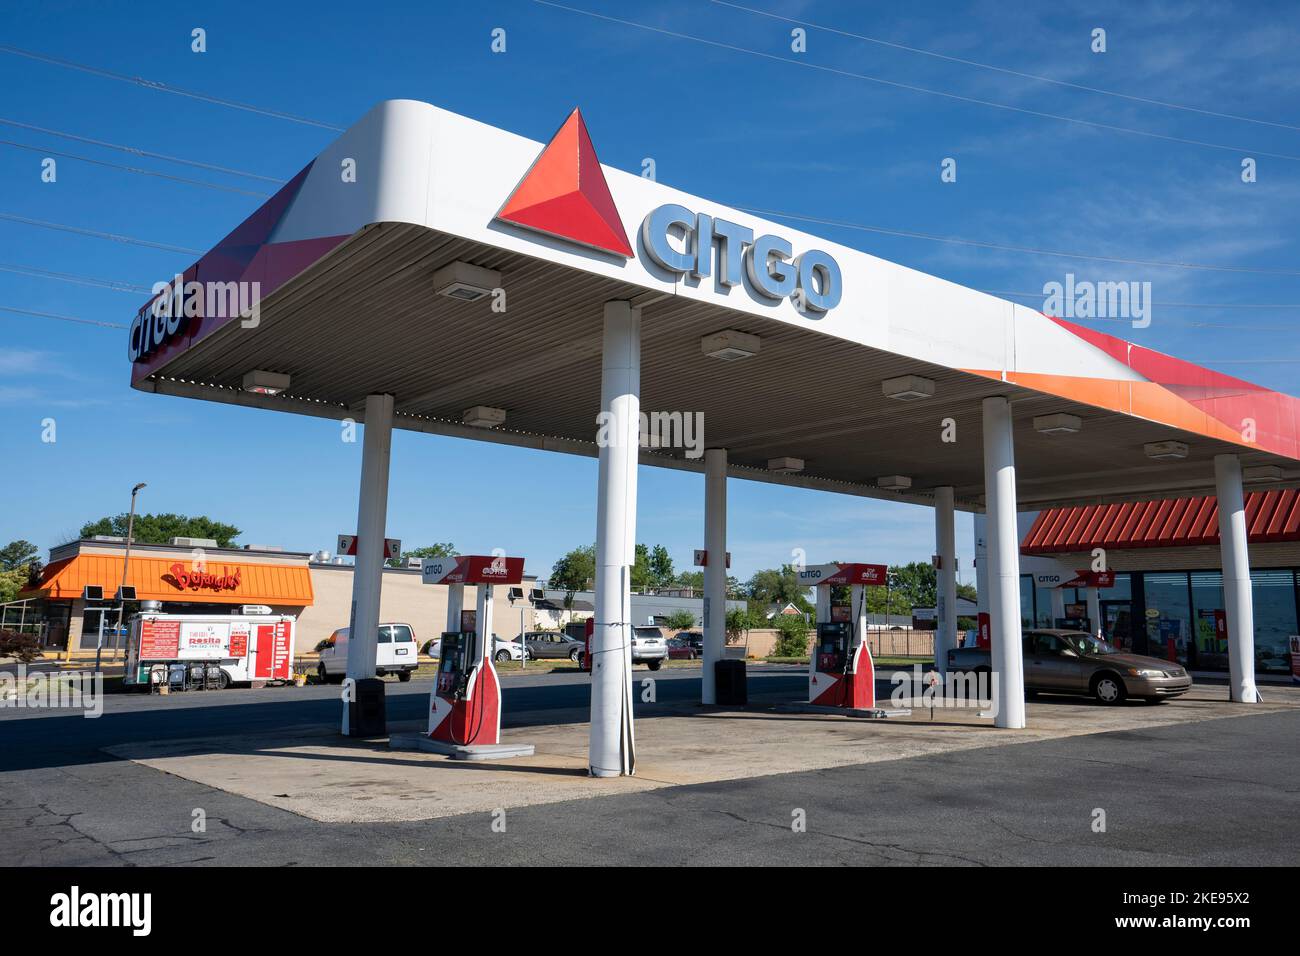 A Citgo gas station in Charlotte, North Carolina, seen on Sunday, June 19, 2022. Stock Photo